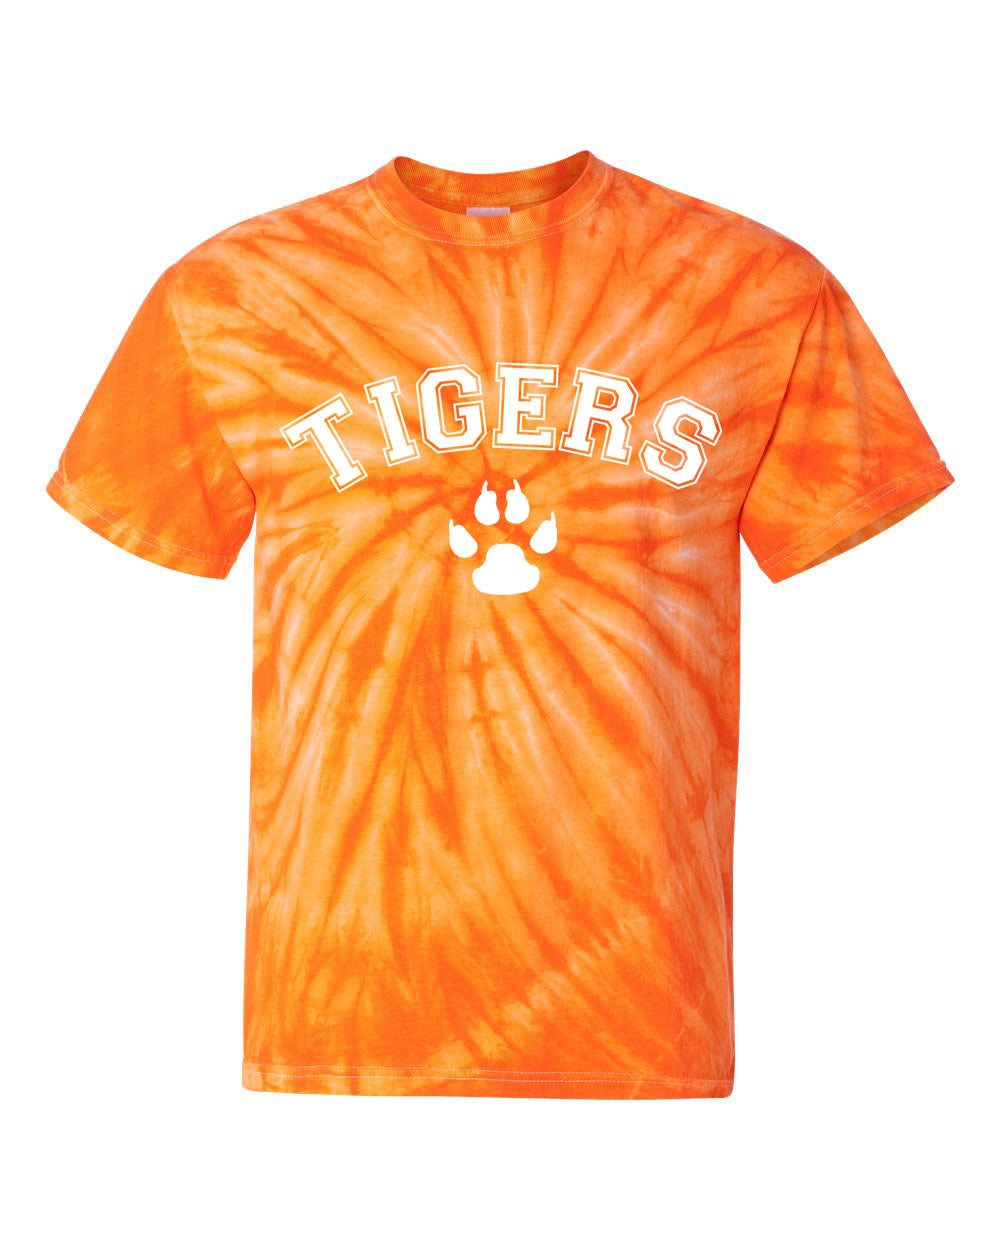 Tigers Design 3 Tie Dye t-shirt